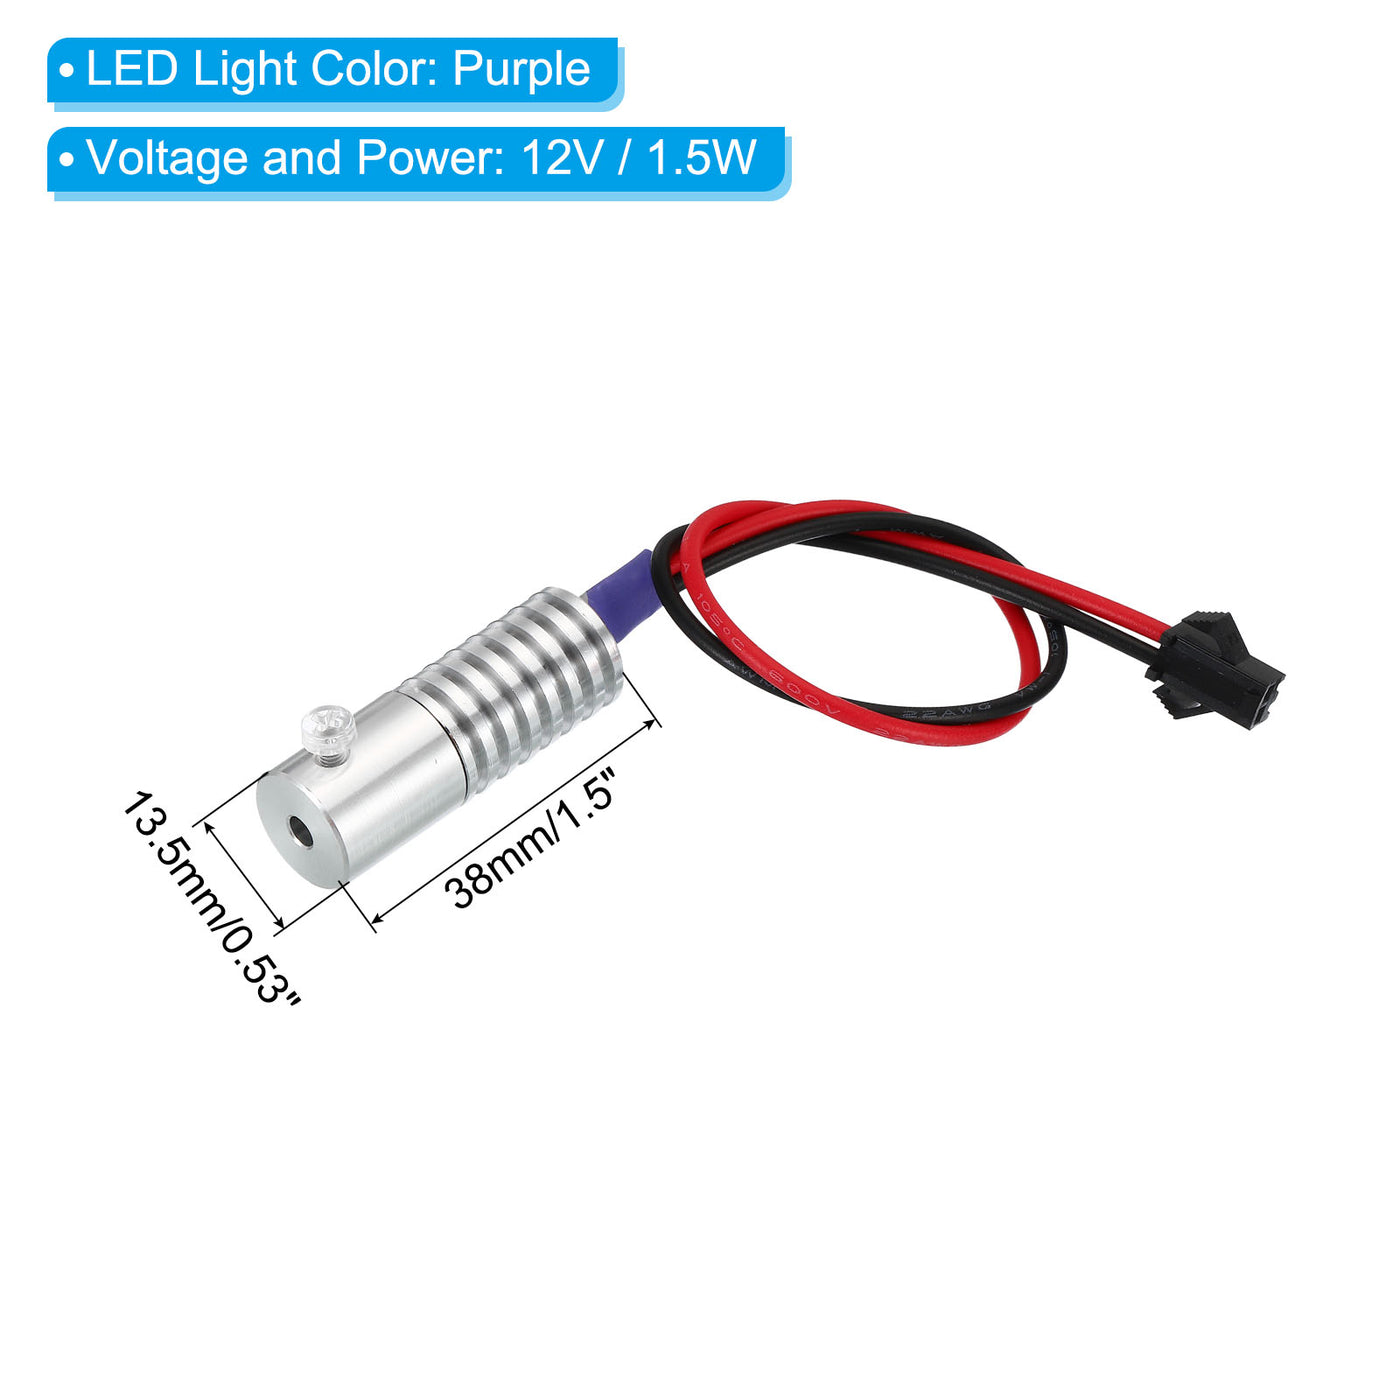 Harfington 3mm 3.0m PMMA Side Glow Fiber Optic Cable Kit, with LED Aluminum Illuminator 12V 1.5W Guide Light Source Decoration for Home DIY Lighting, Purple